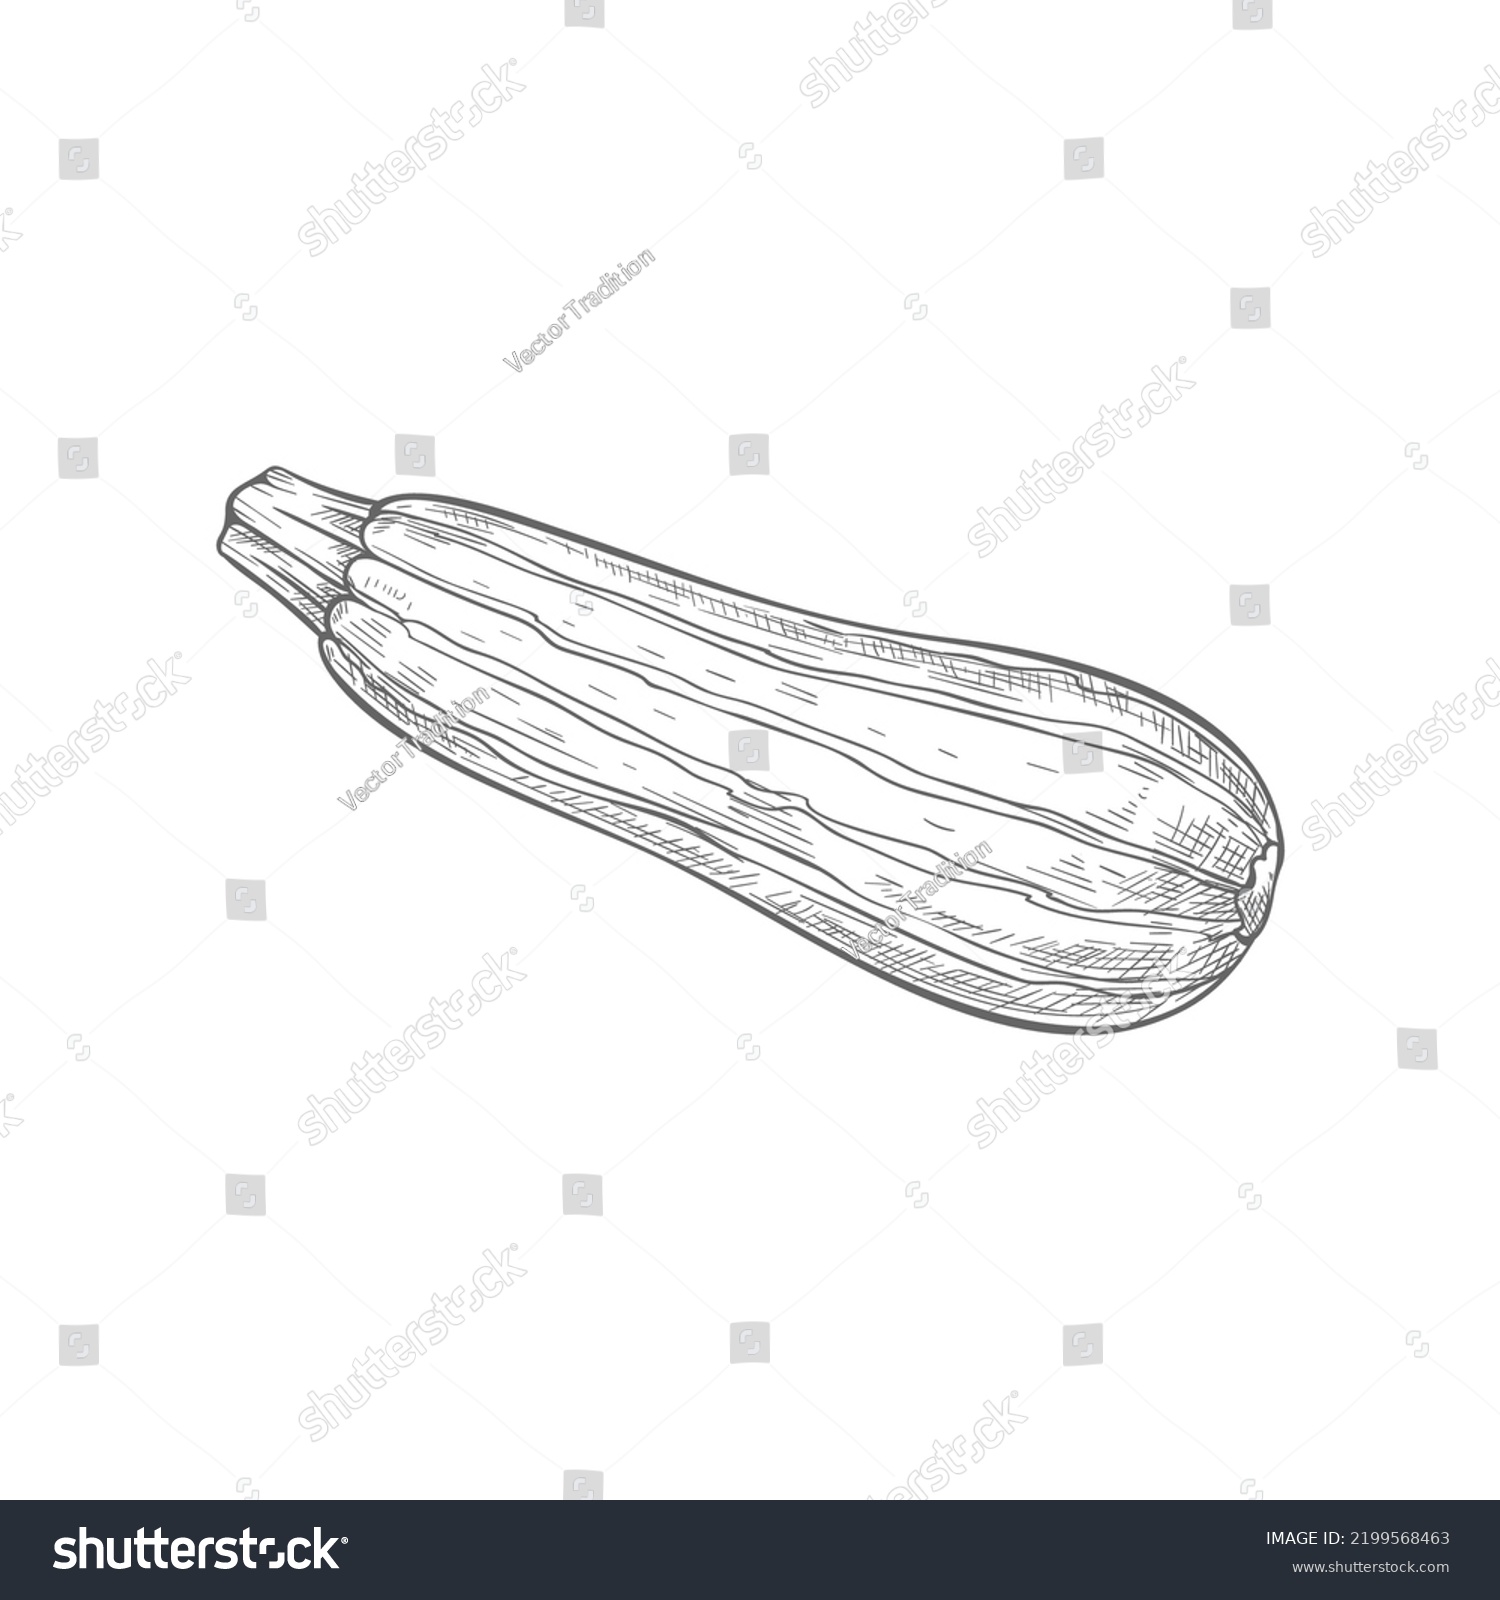 Zucchini vegetable isolated monochrome sketch. Vector vegetarian food, striped squash with stem, hand drawn icon. Courgette summer squash, baby marrow Cucurbita pepo, whole veggie zucchini #2199568463